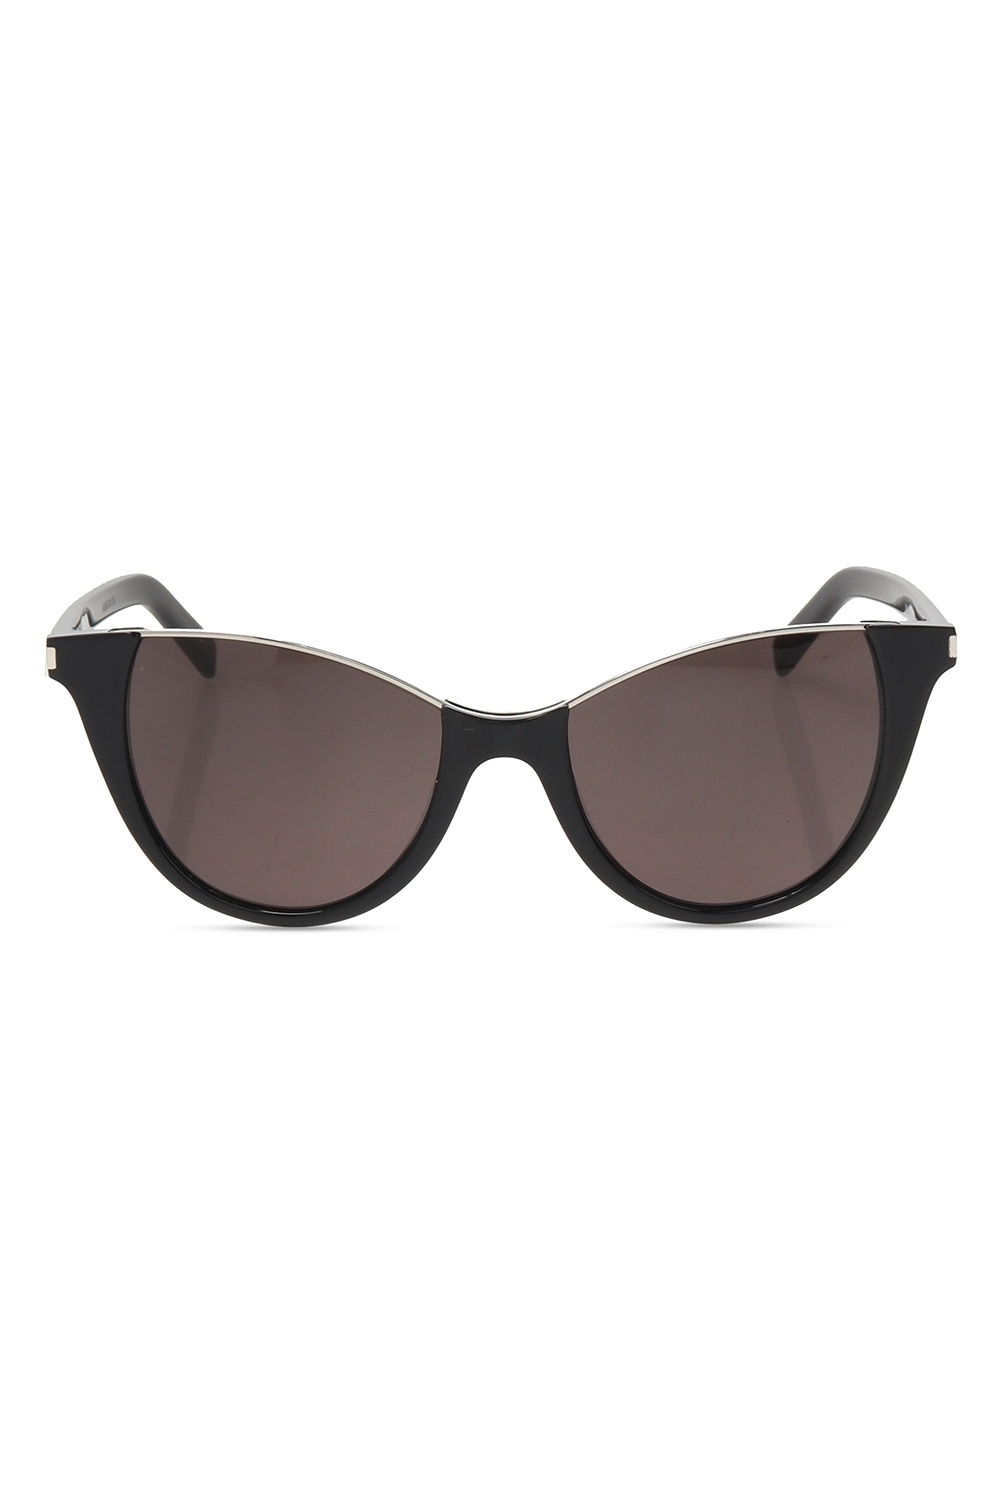 Saint Laurent 'SL 368' sunglasses, Women's Accessories